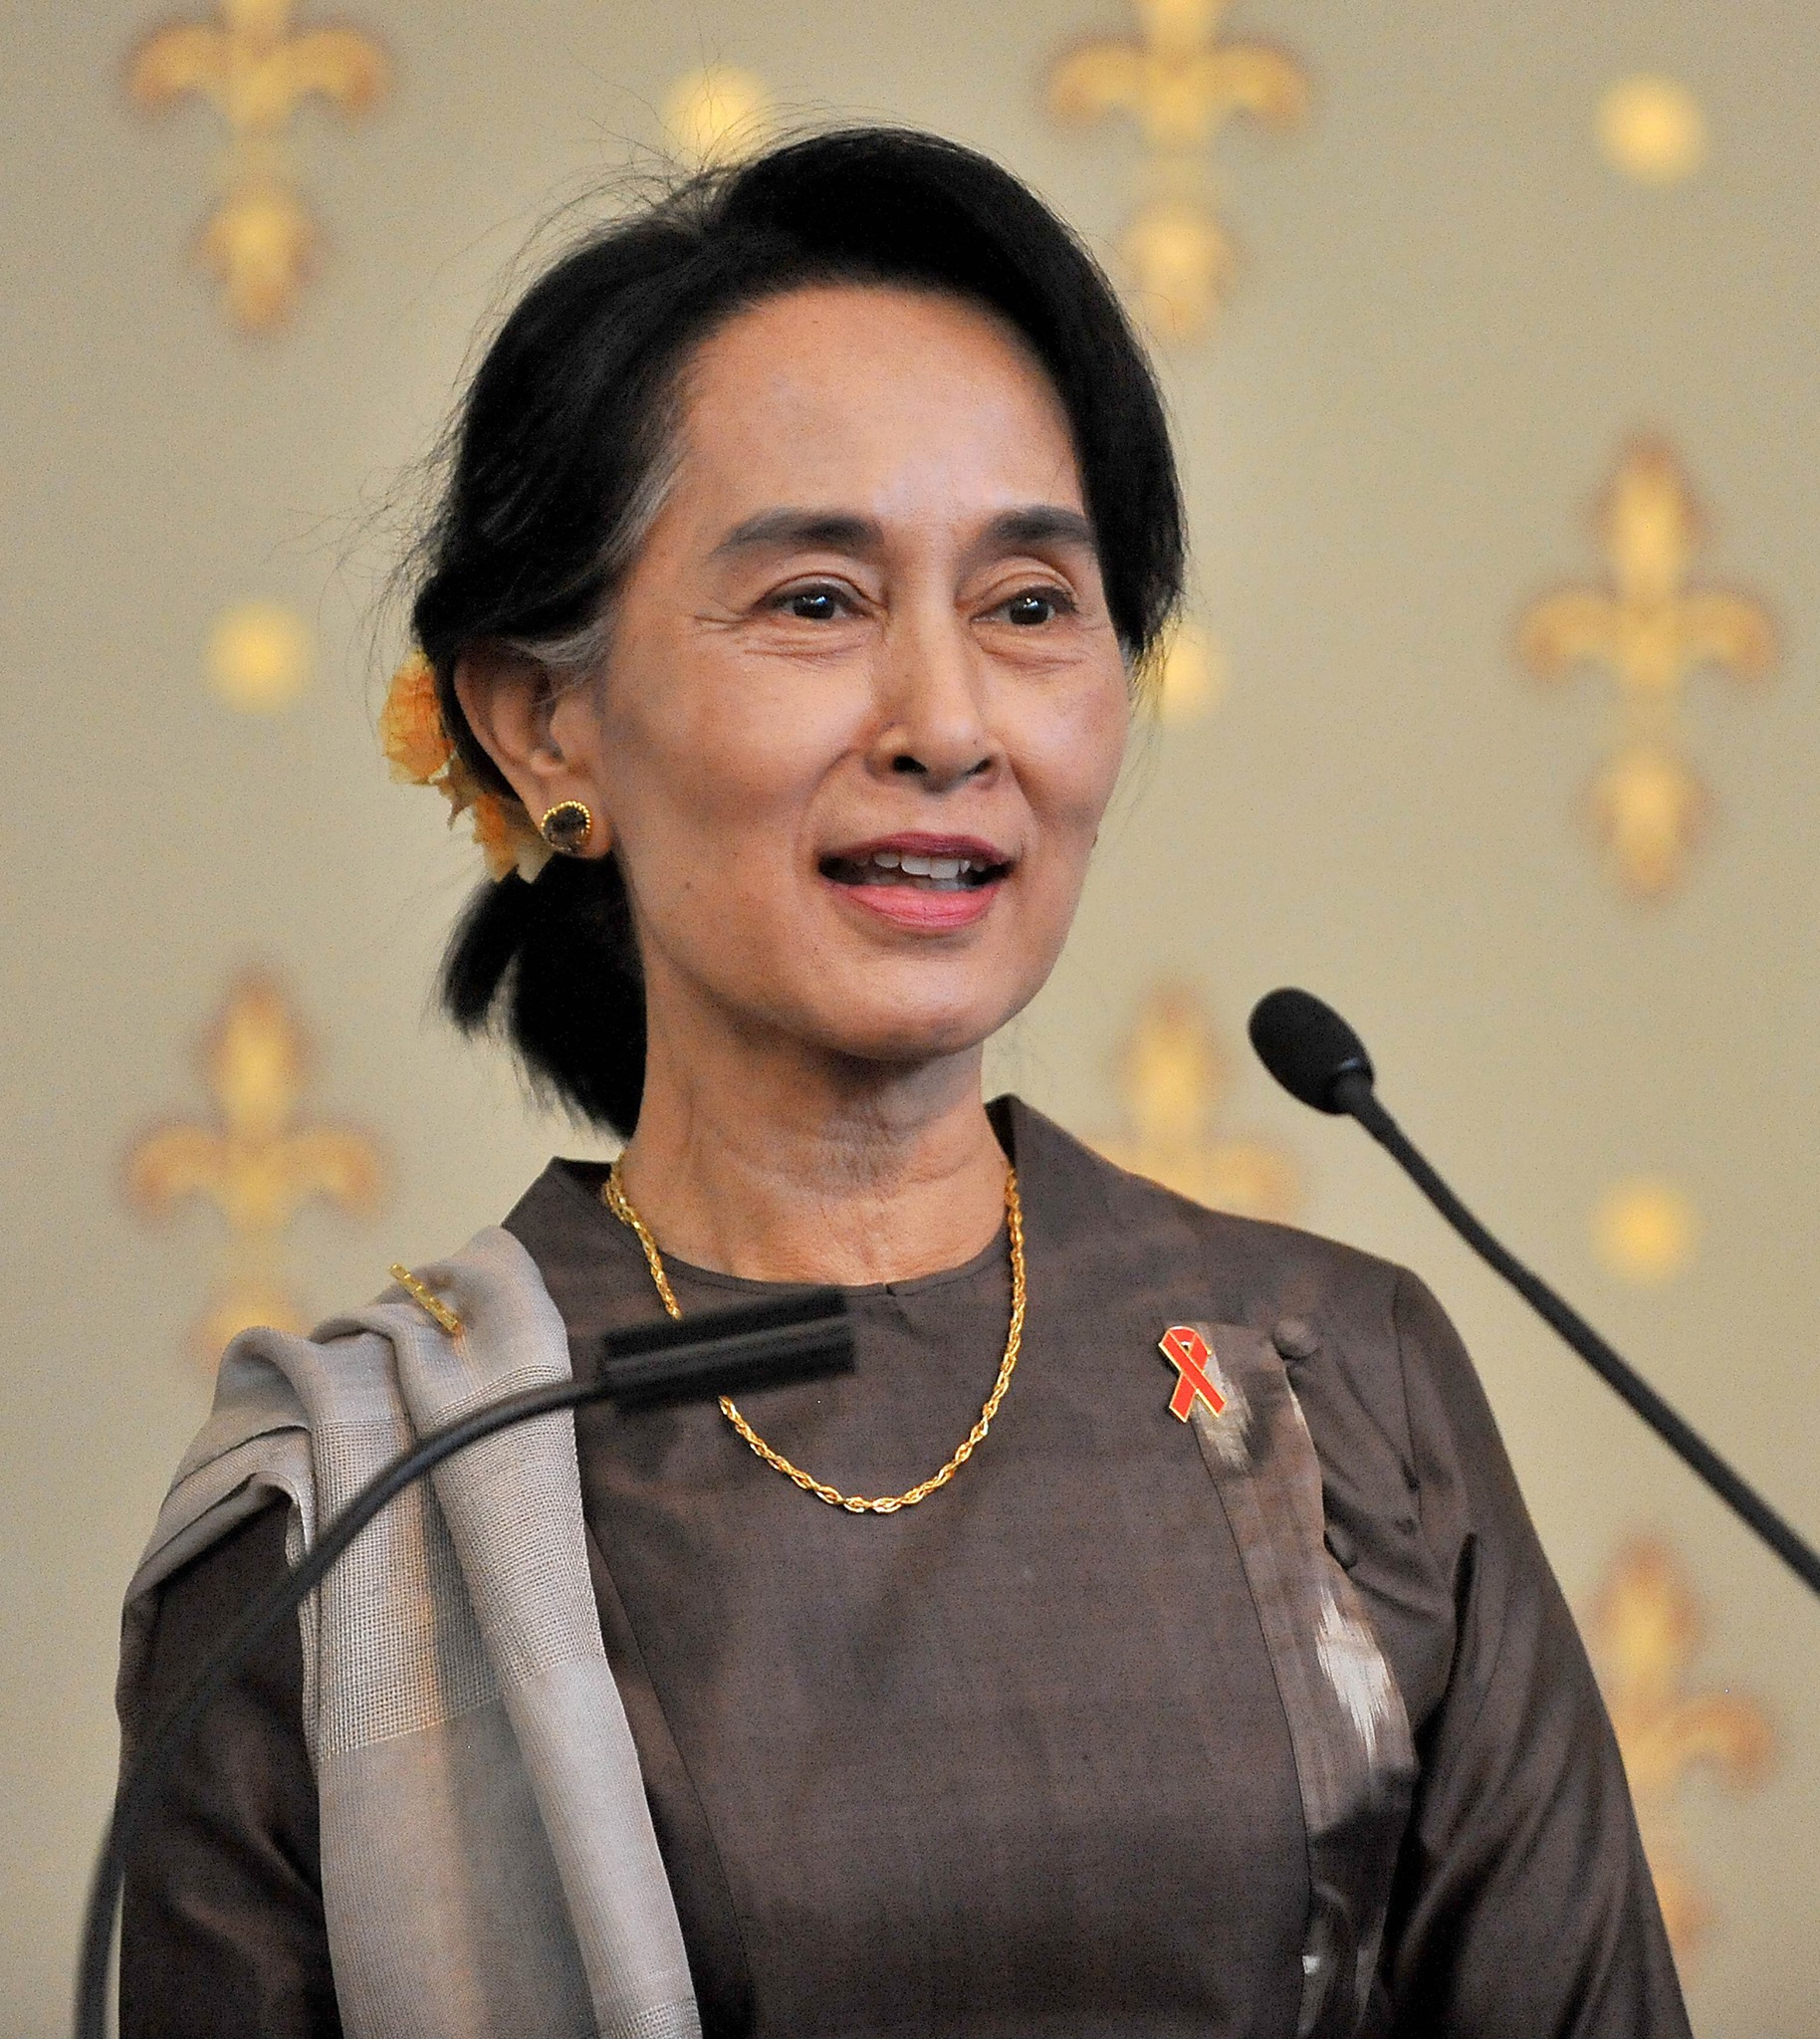 Chi è Aung San Suu Kyi